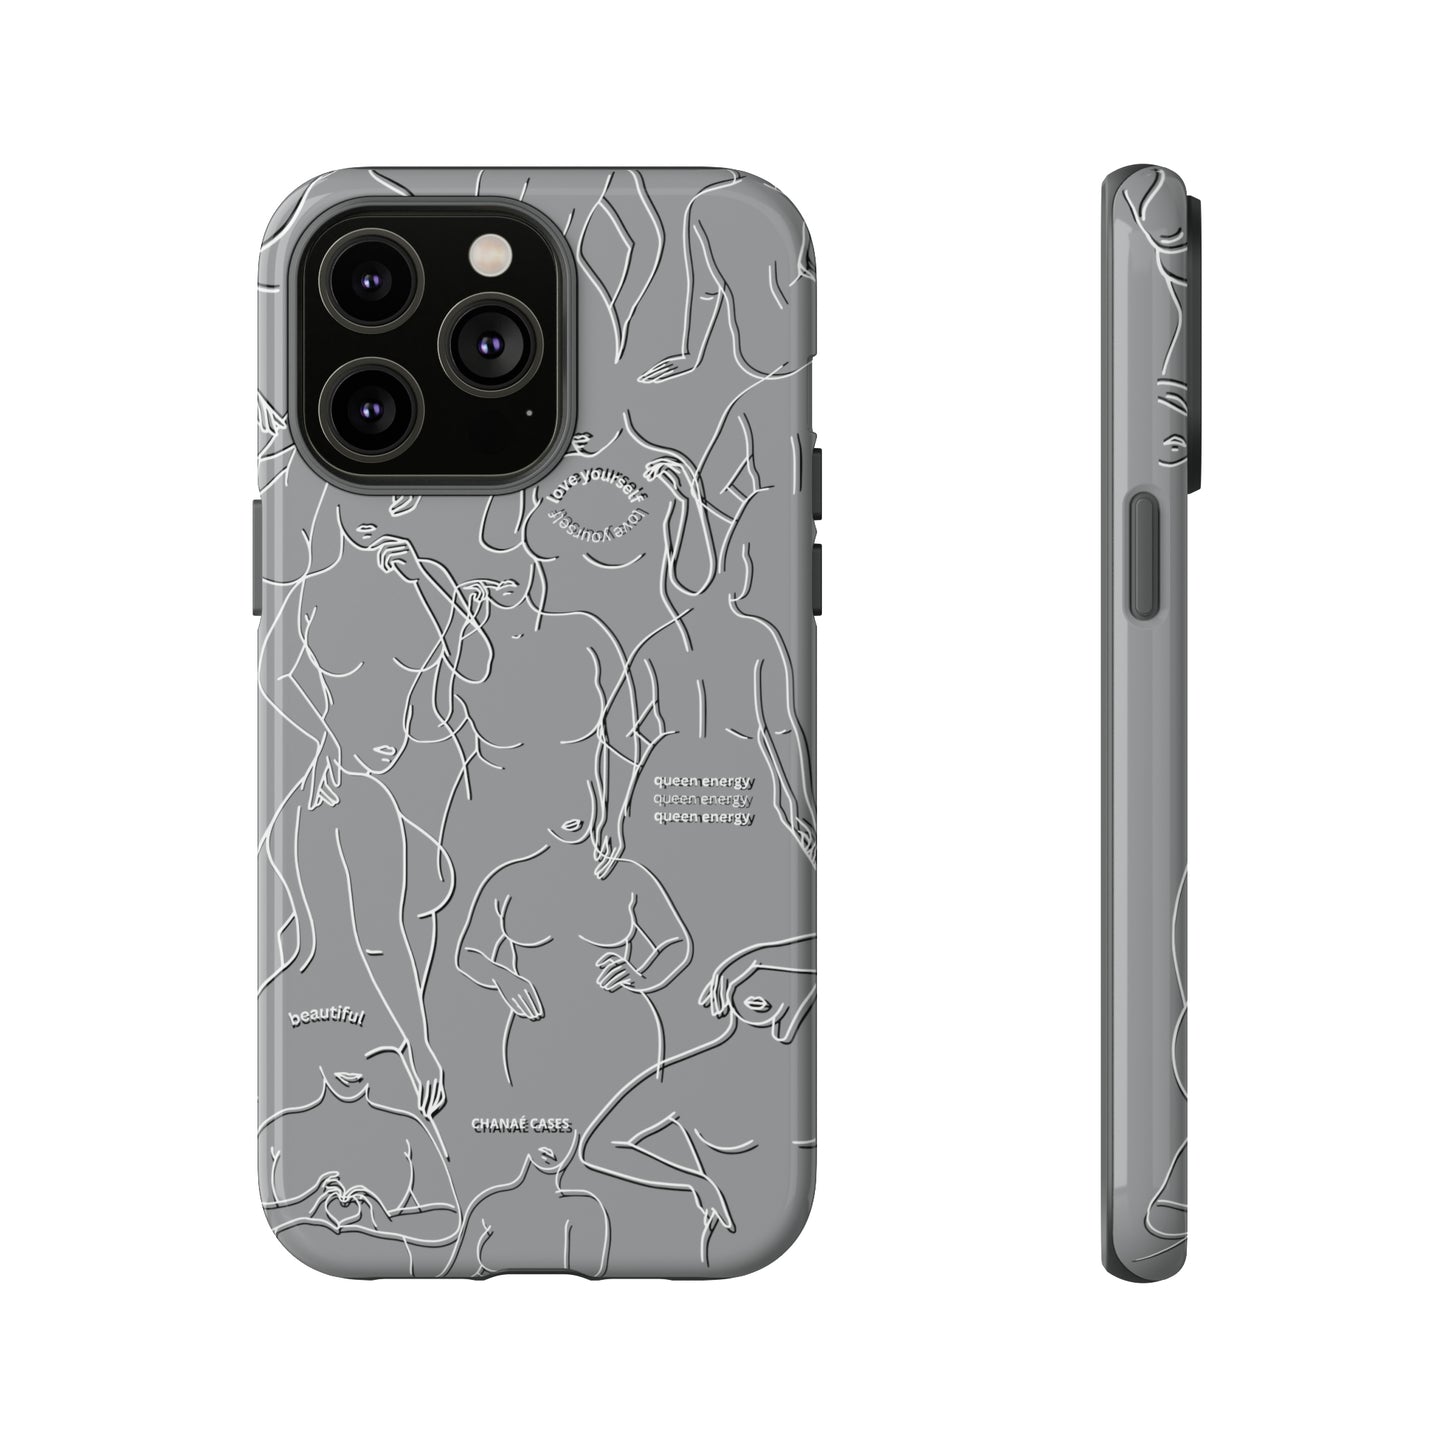 Love Your Body iPhone "Tough" Case (Grey)